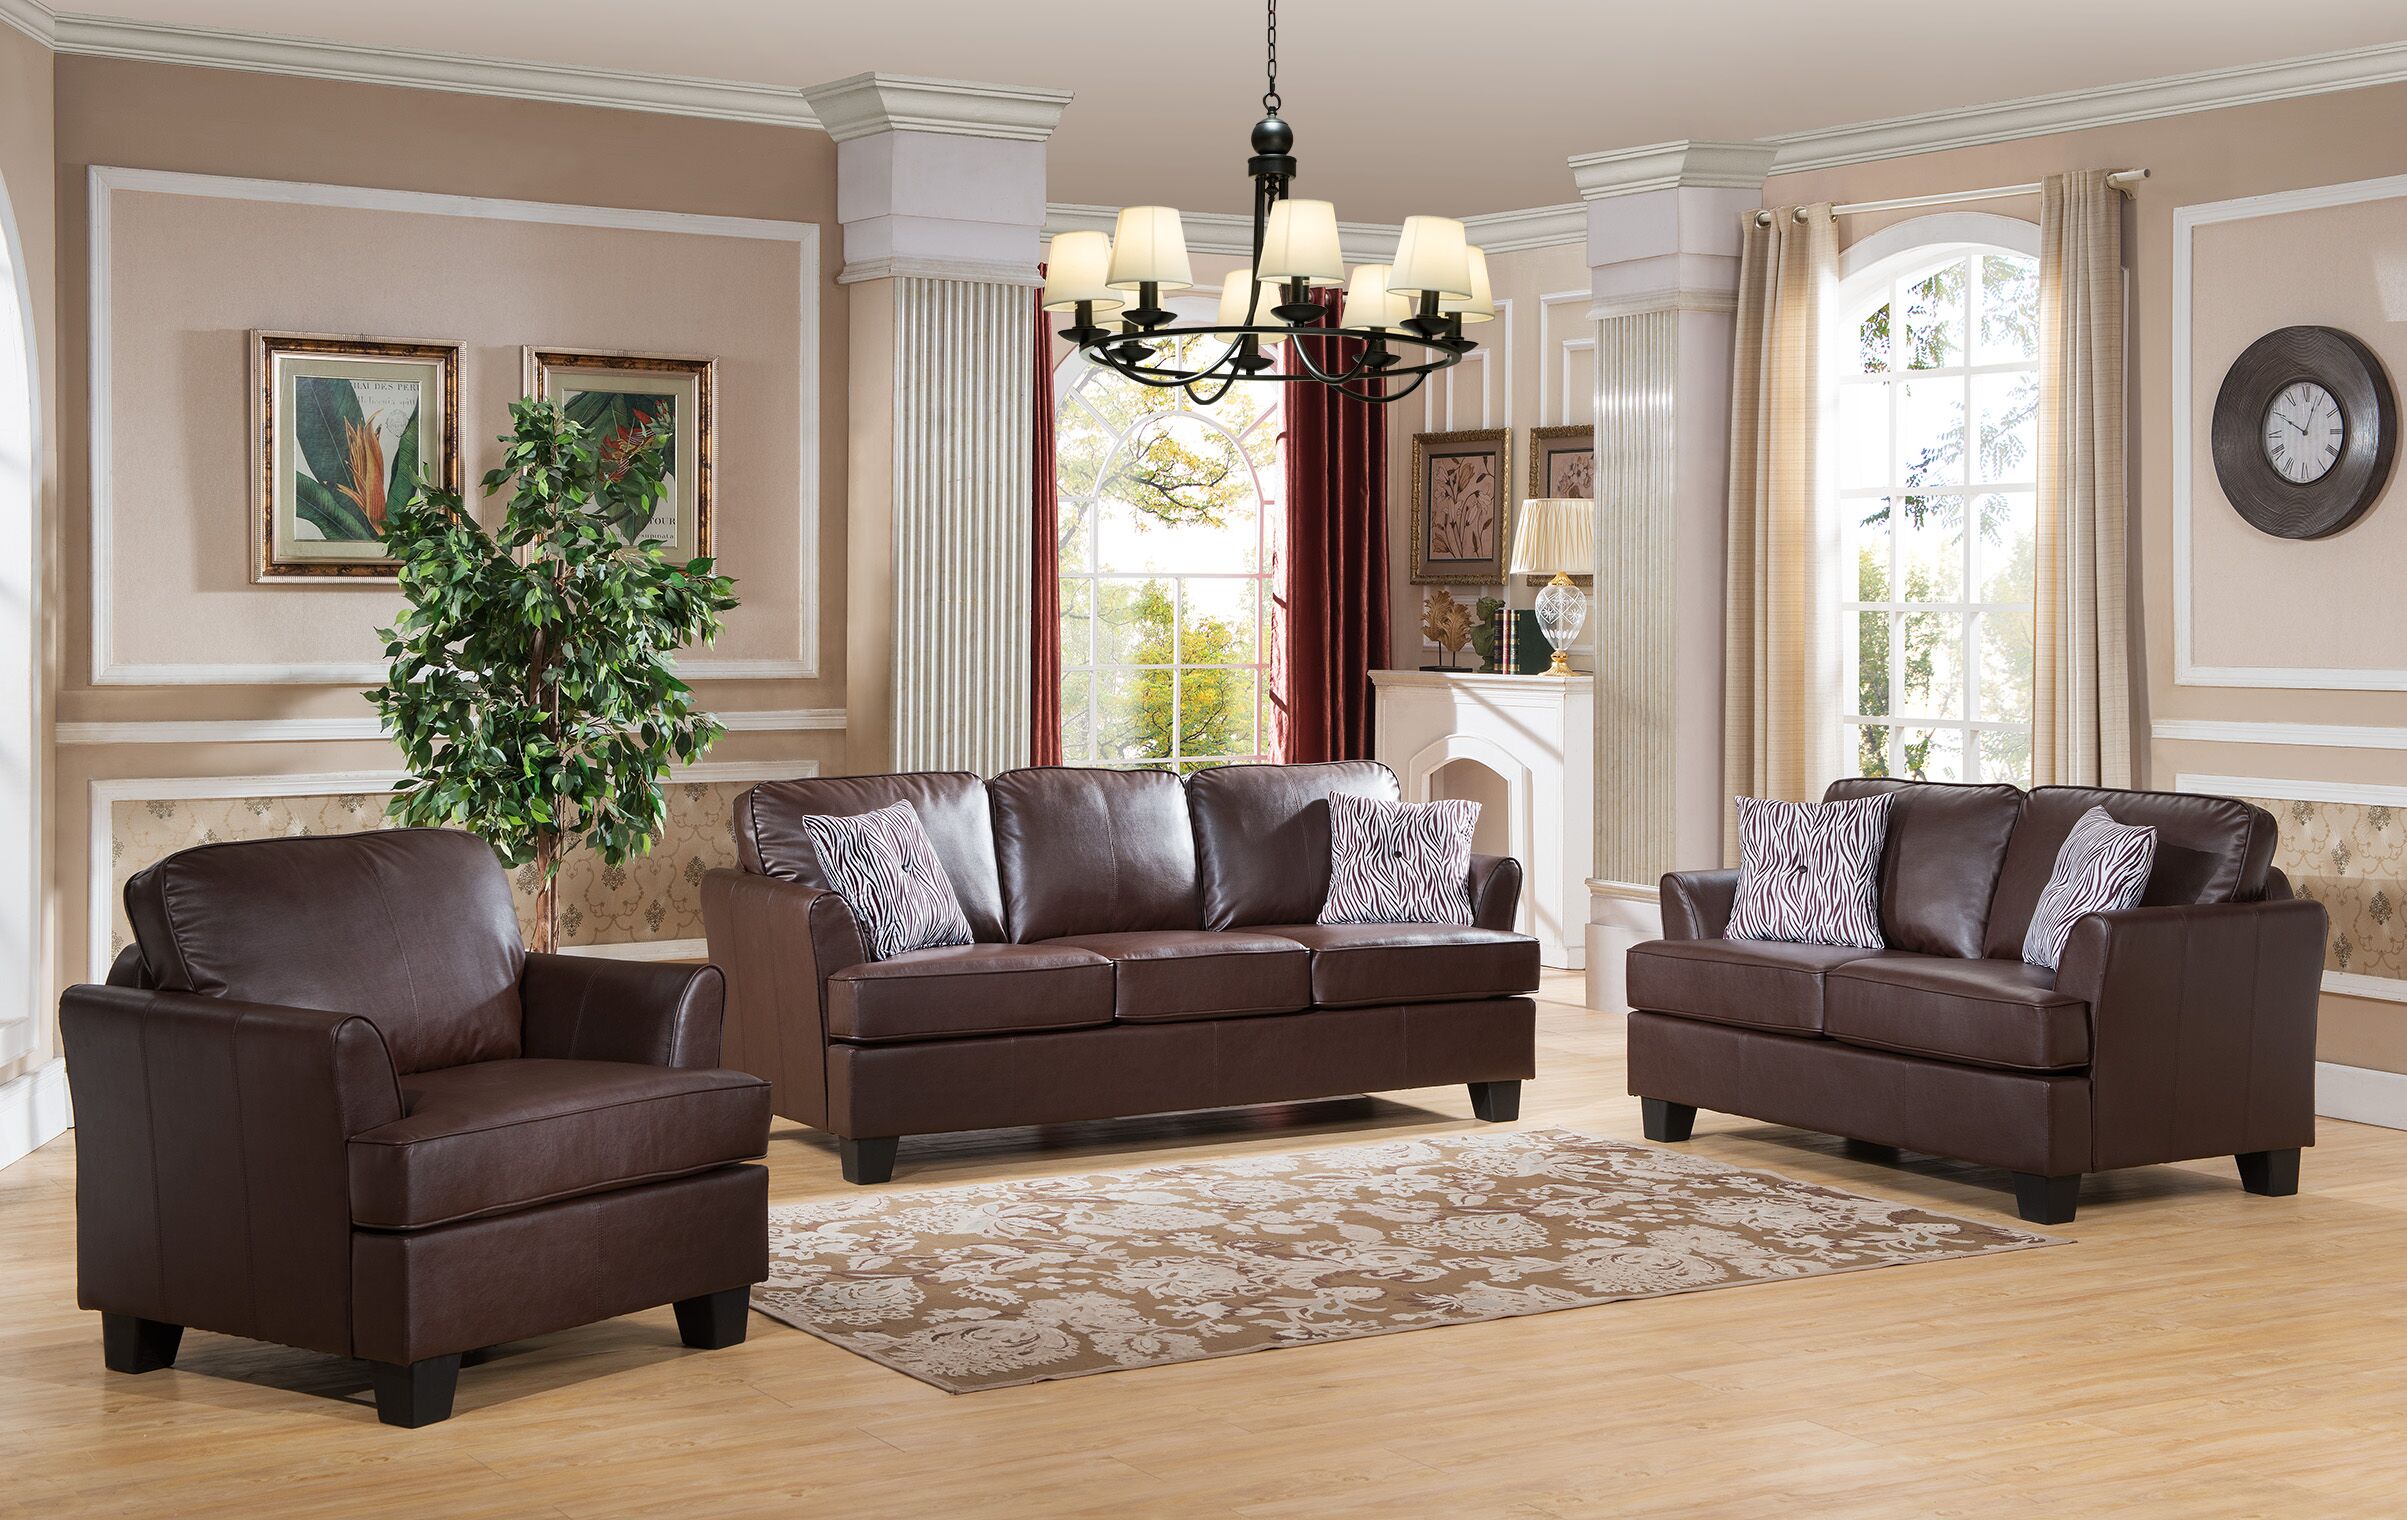 yeefy brown leather living room